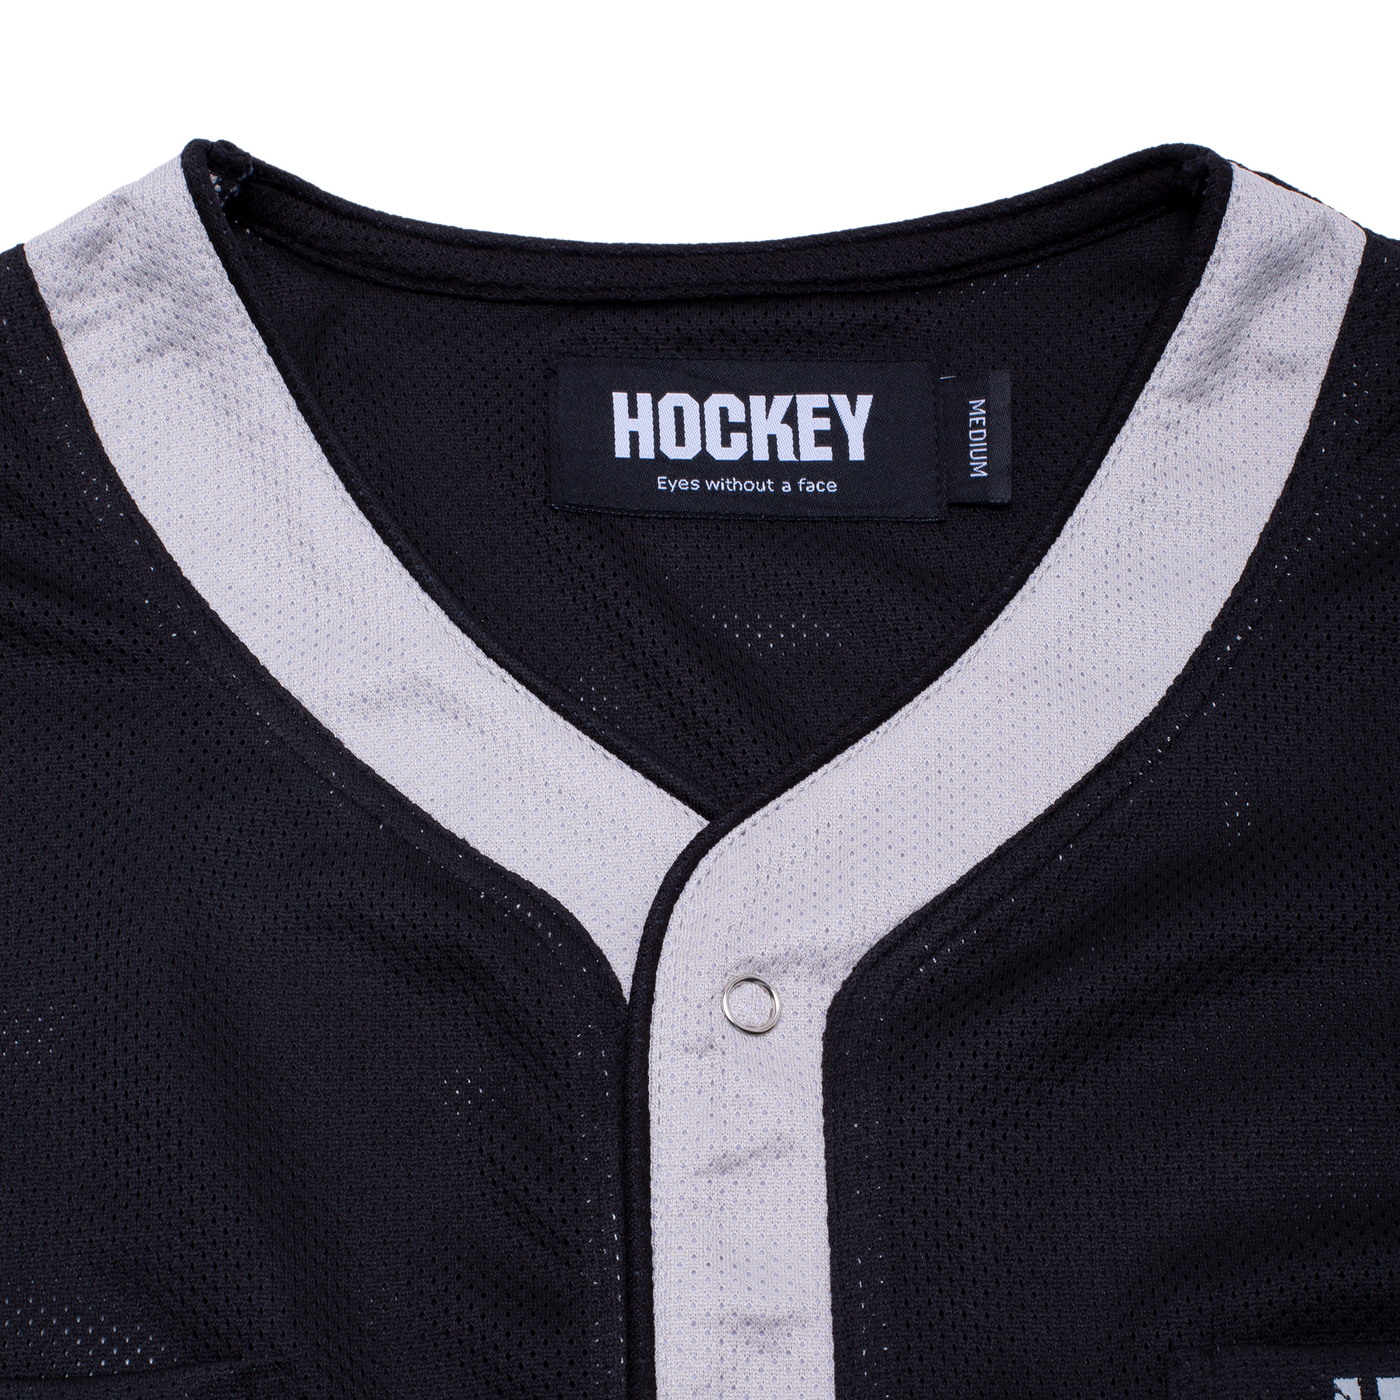 Blank Hockey Jerseys｜Hockey Socks｜Baseball Jerseys 